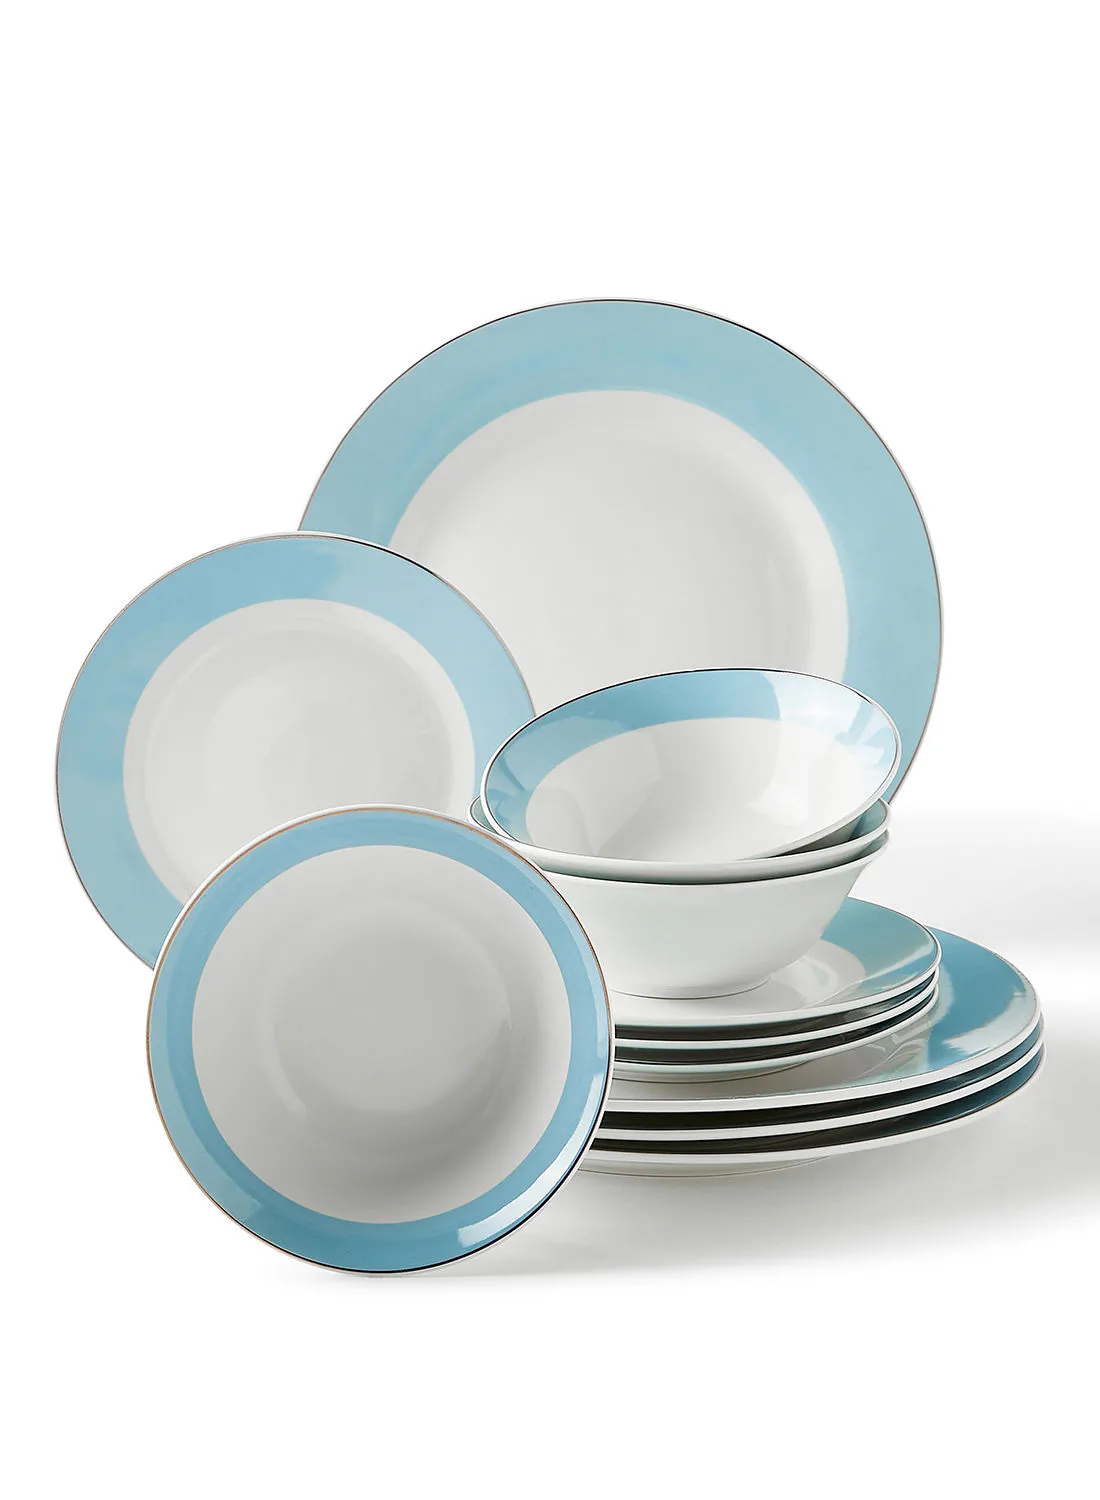 noon east 12 Piece Porcelain Dinner Set - Dishes, Plates - Dinner Plate, Side Plate, Bowl - Serves 4 - Festive Design Ring/Gold